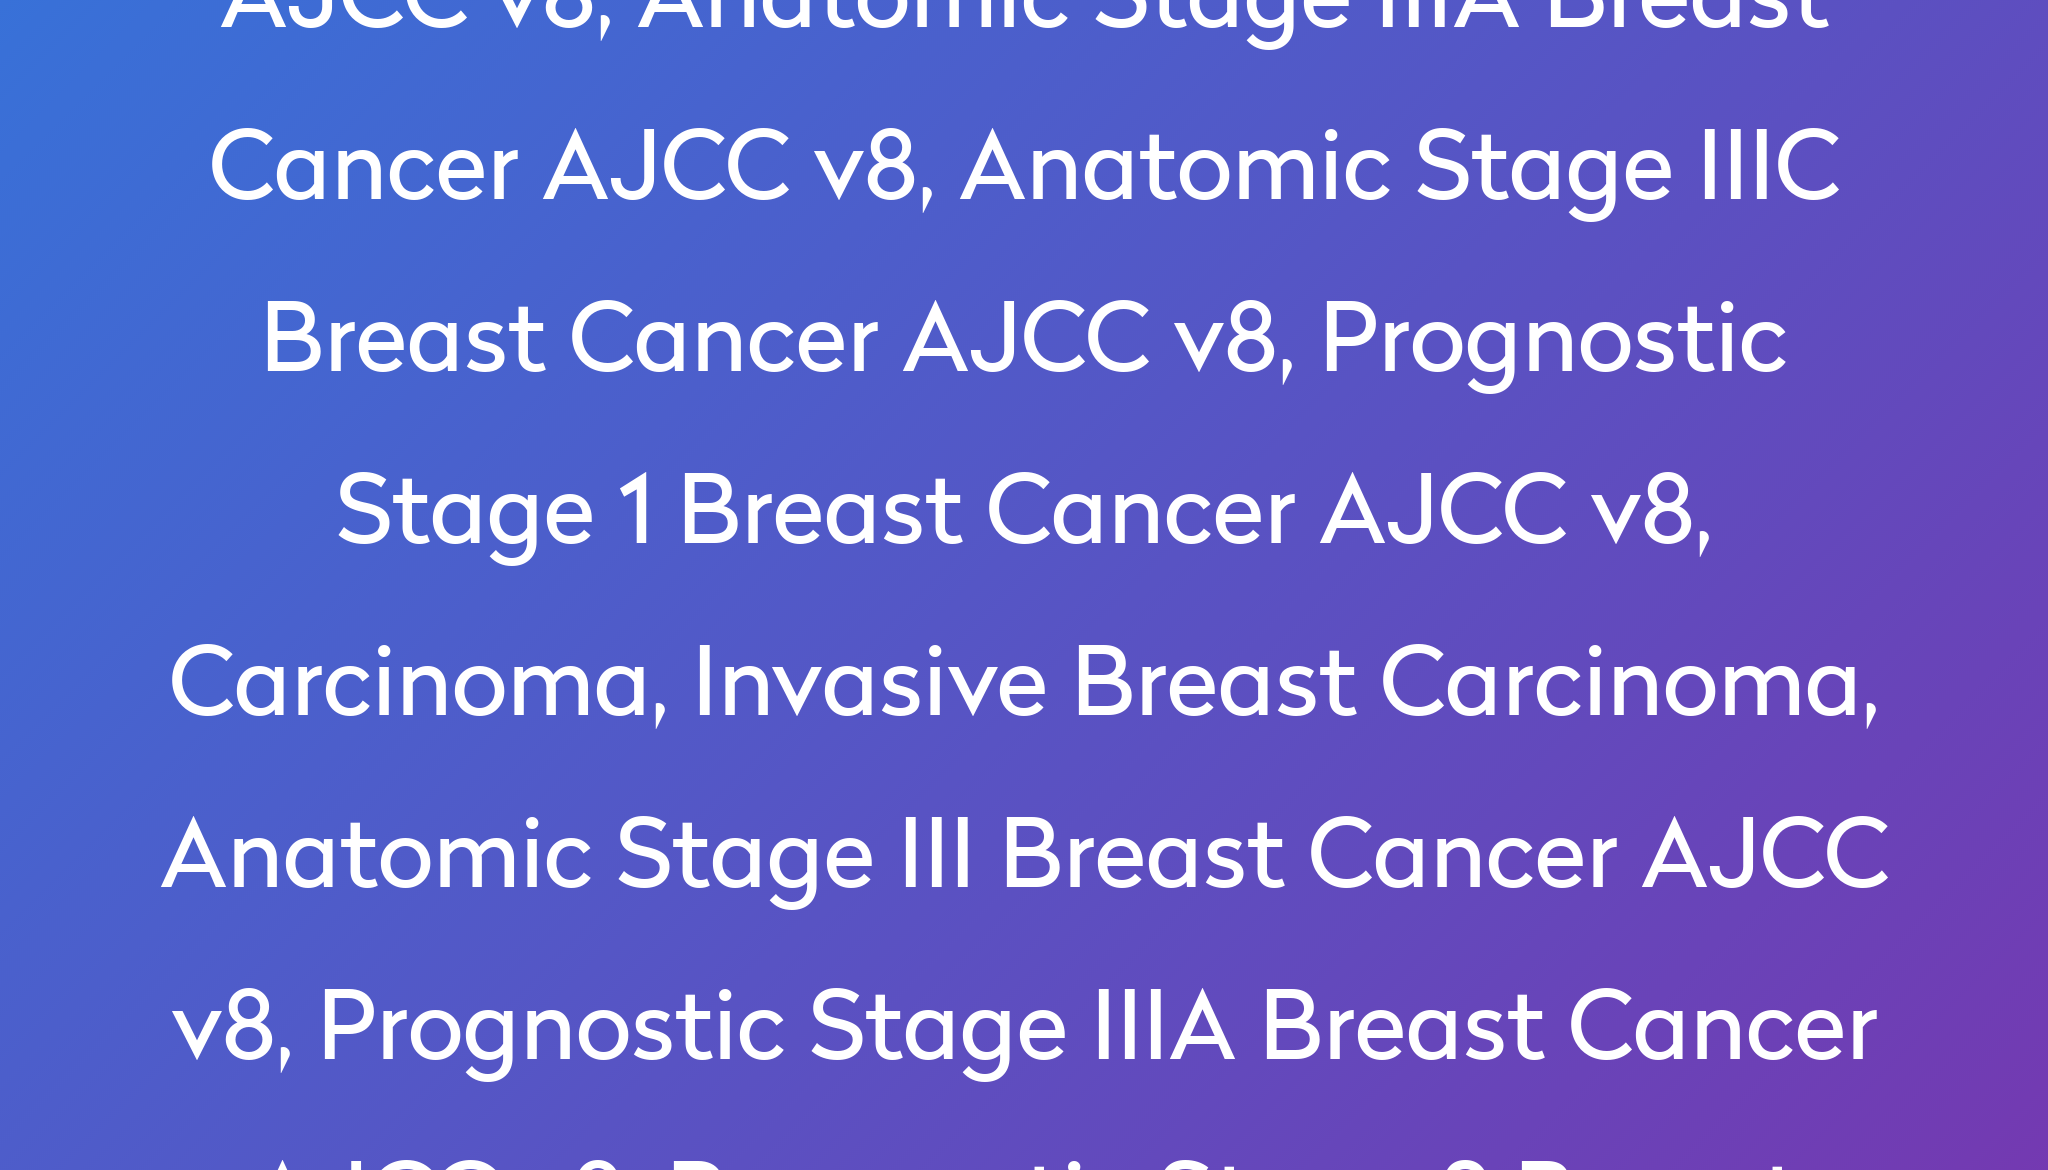 Discourse marble deep Tucatinib for Prognostic Stage IIB Breast Cancer AJCC v8 Clinical Trial  2022 | Power